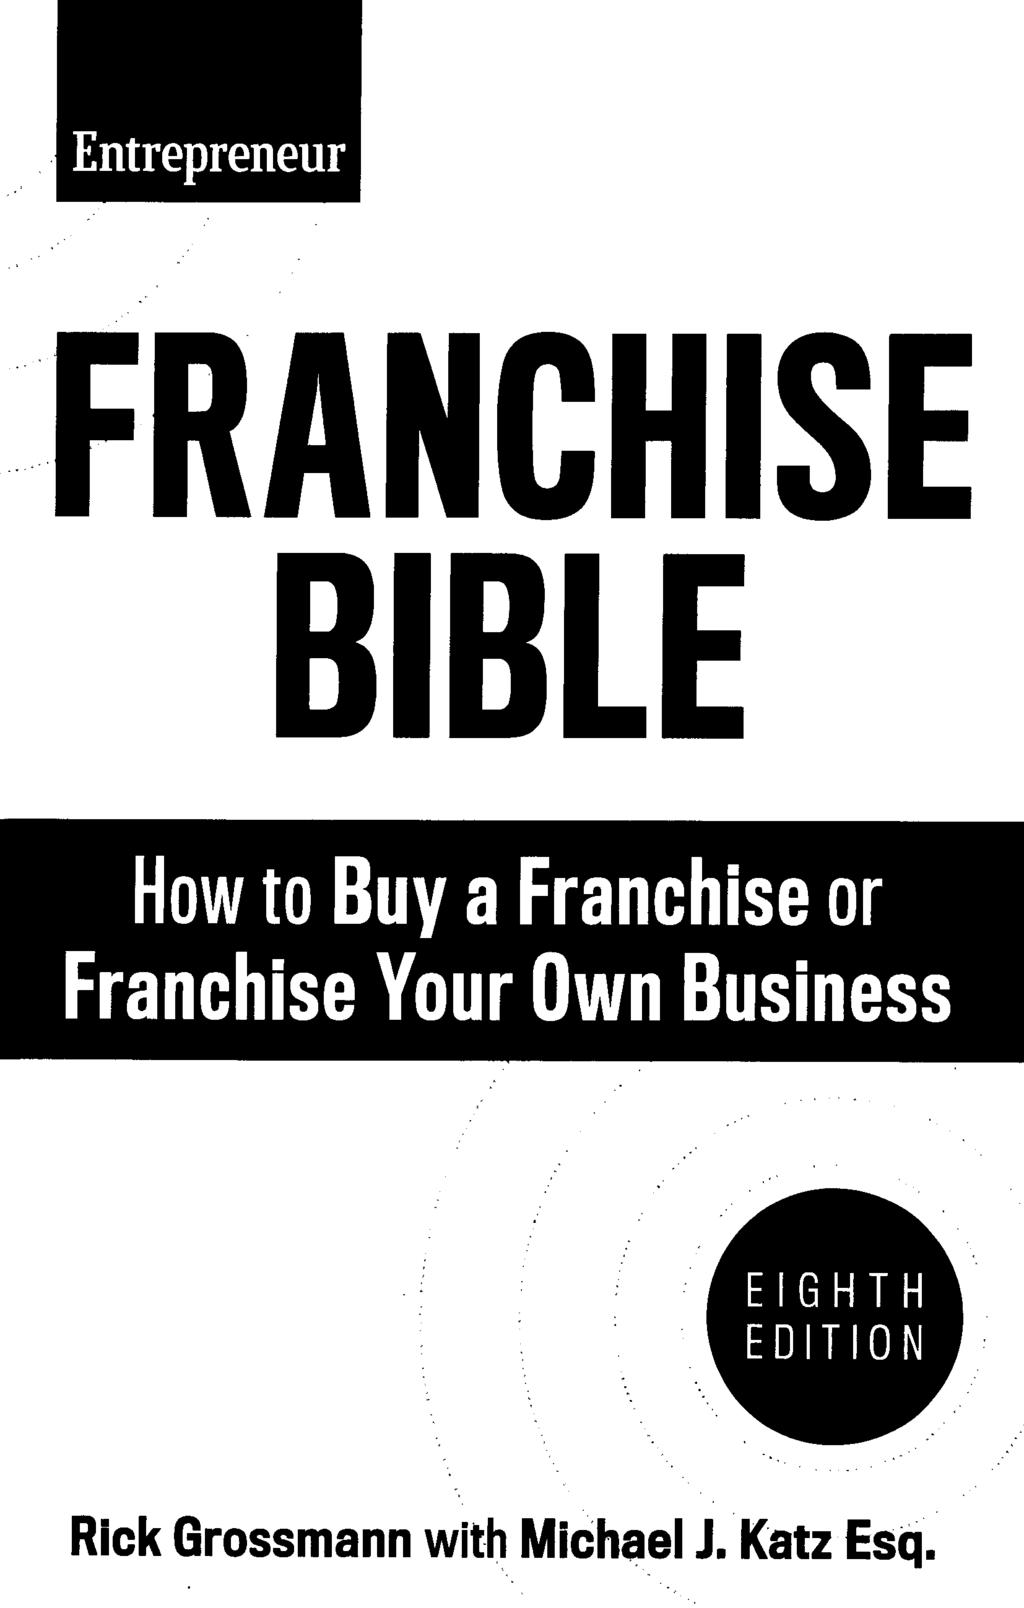 Entrepreneur FRANCHISE BIBLE How to Buy a Franchise or Franchise